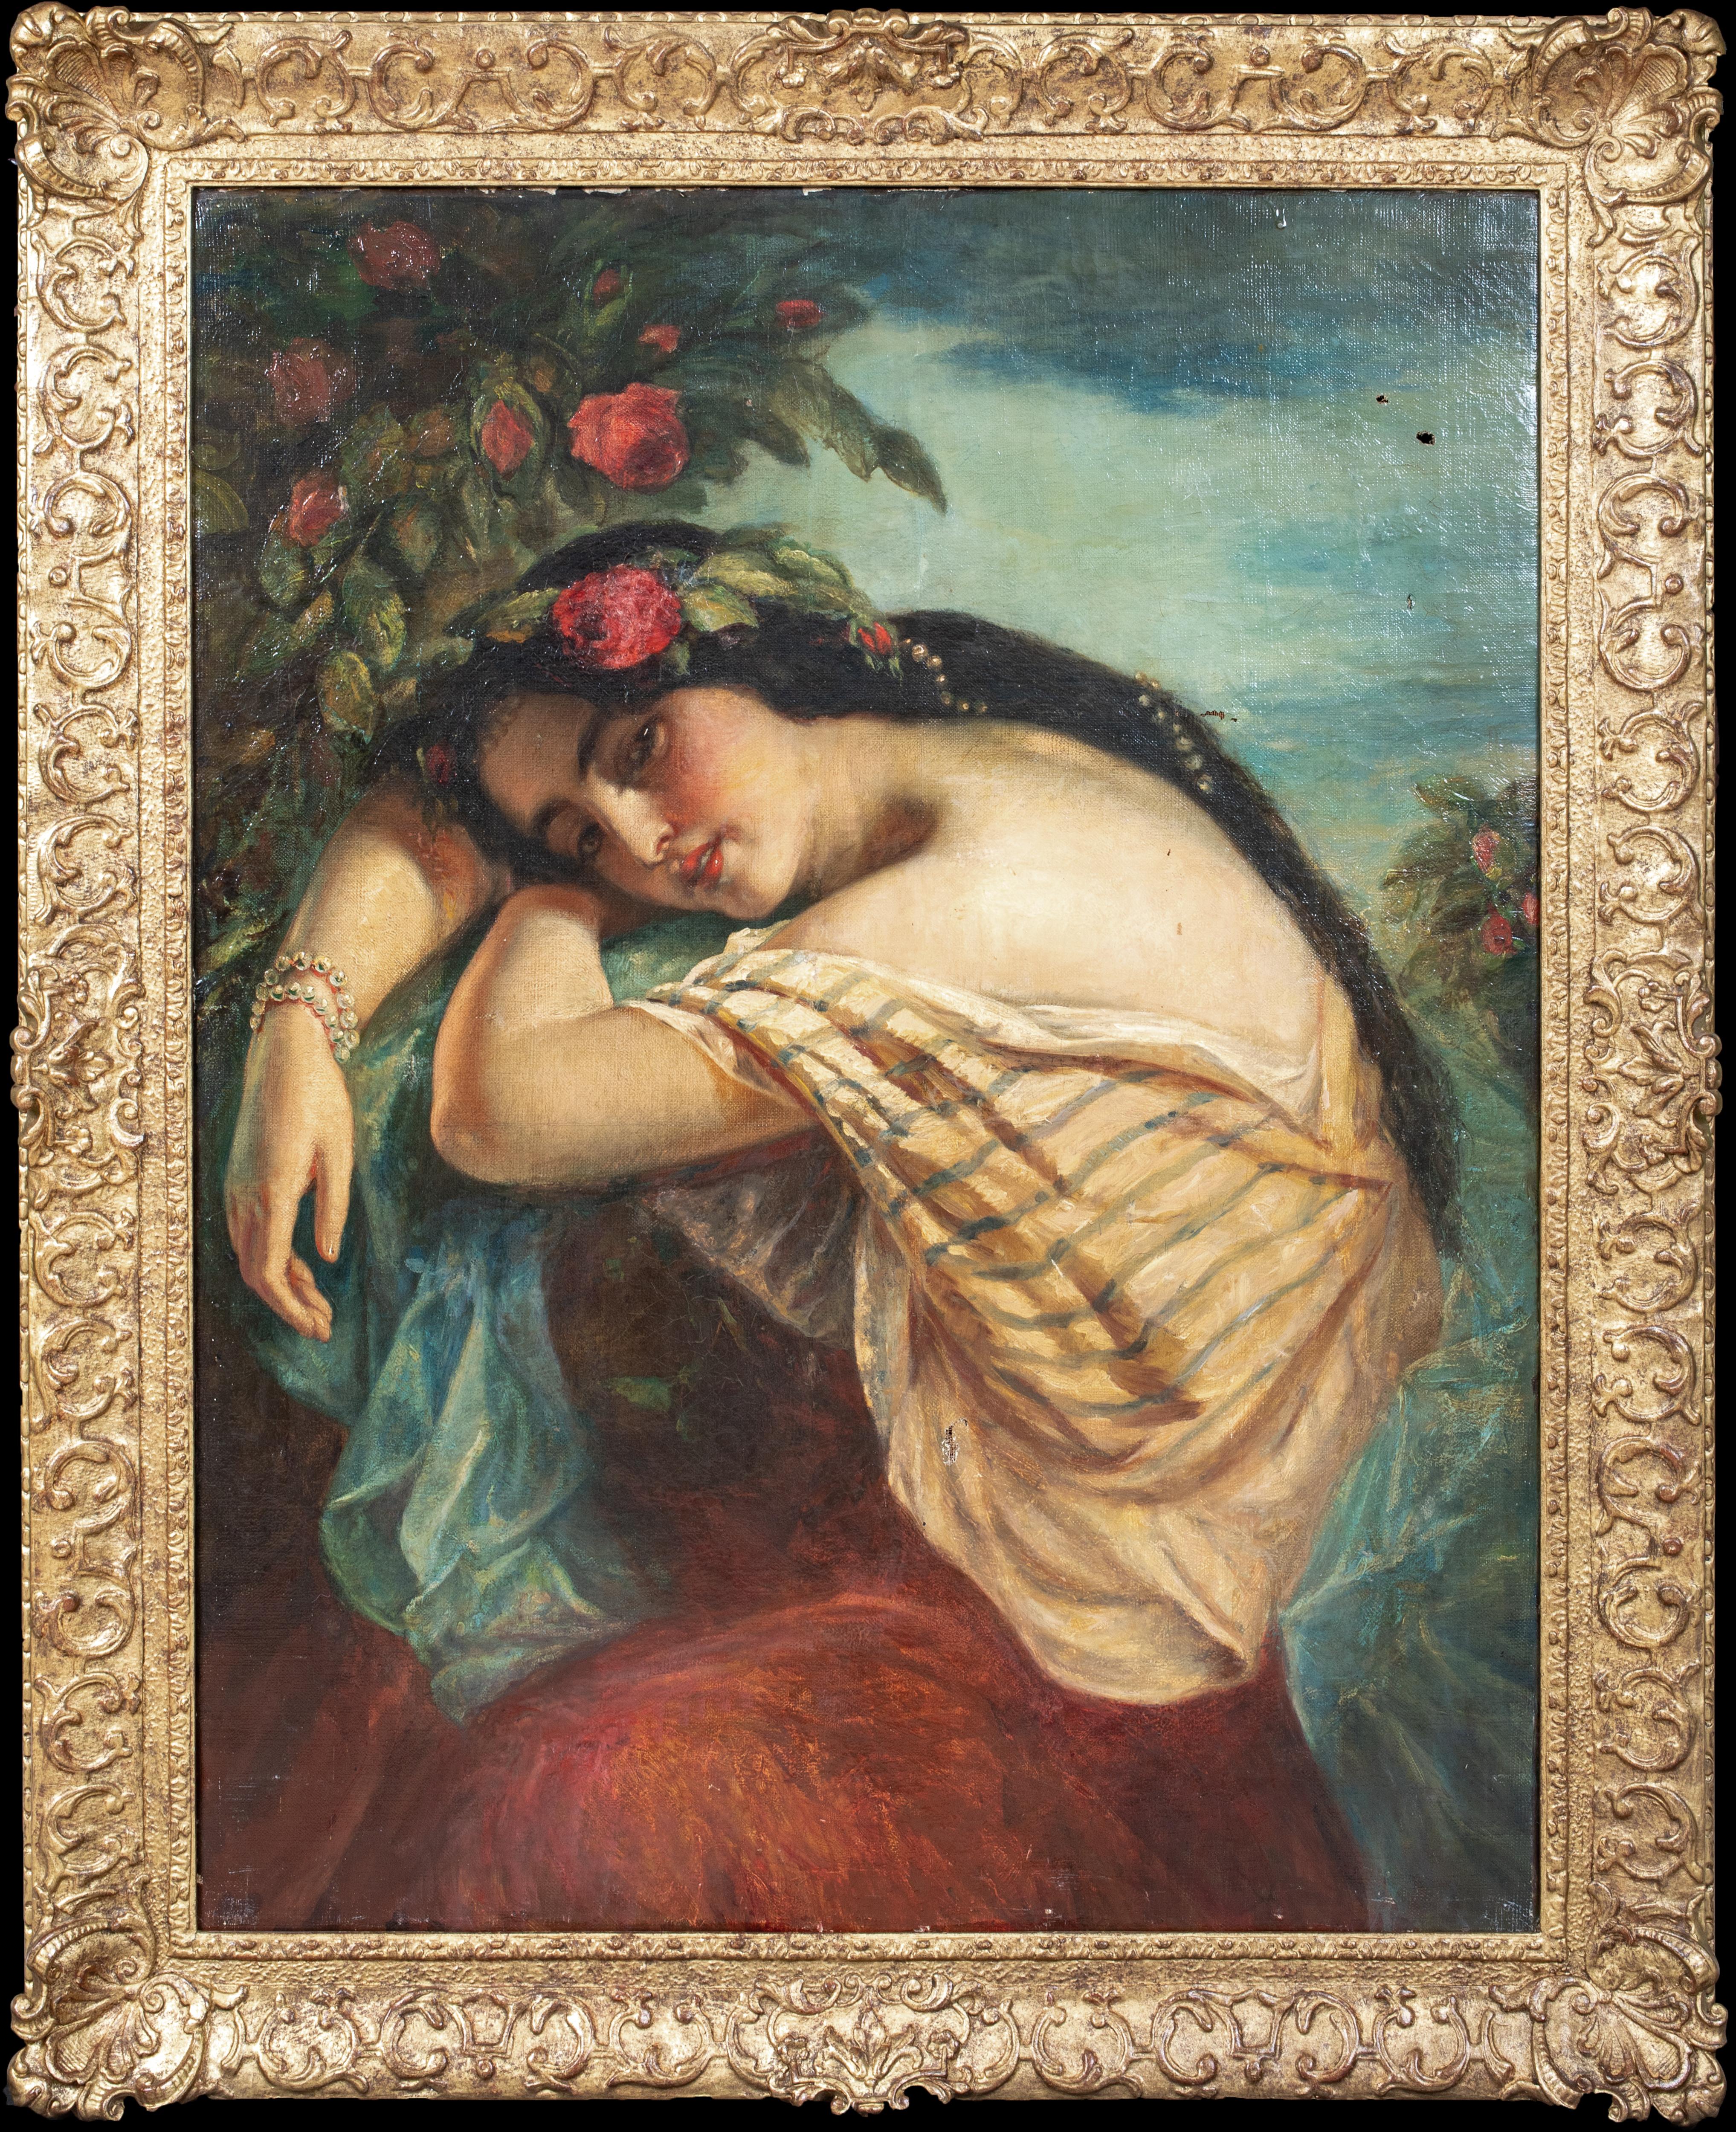 Unknown Portrait Painting - In Reflection, 19th Century   English Romantic School  Pre-Raphaelite